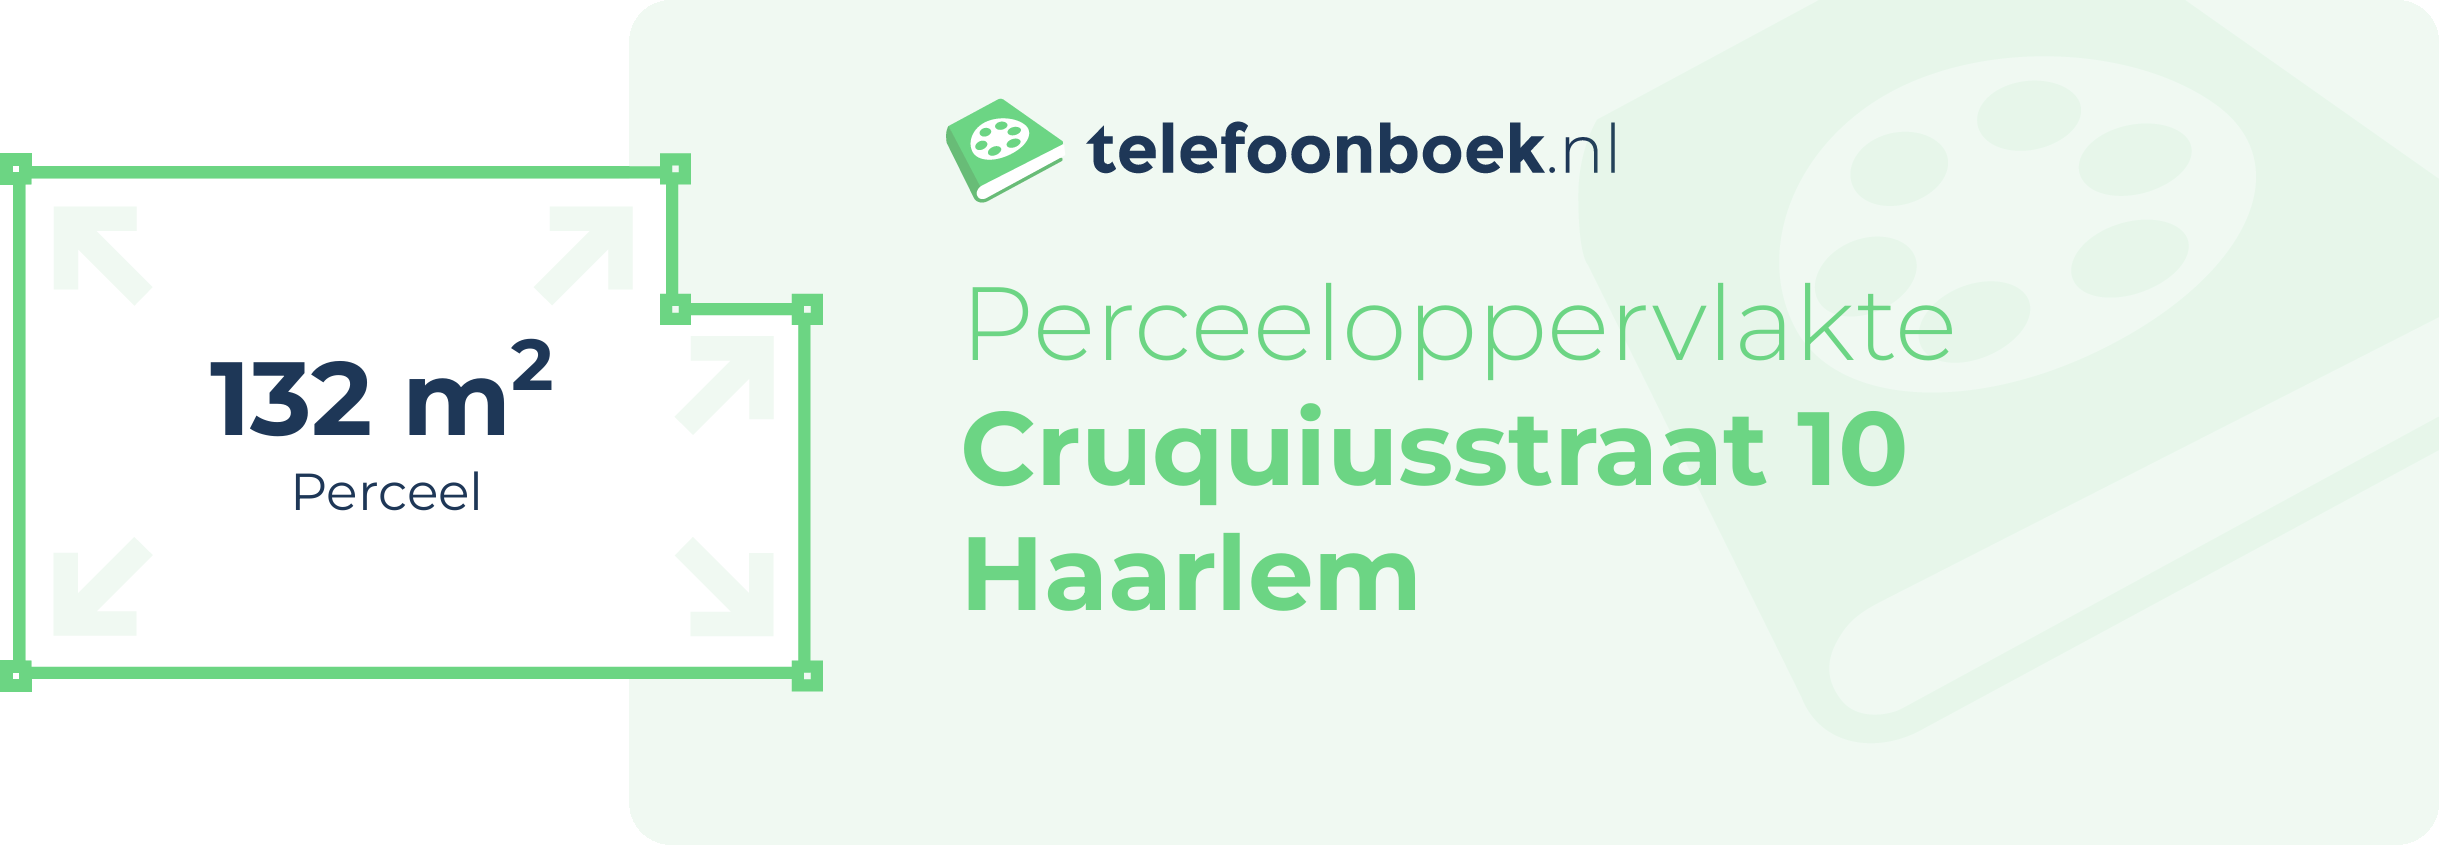 Perceeloppervlakte Cruquiusstraat 10 Haarlem